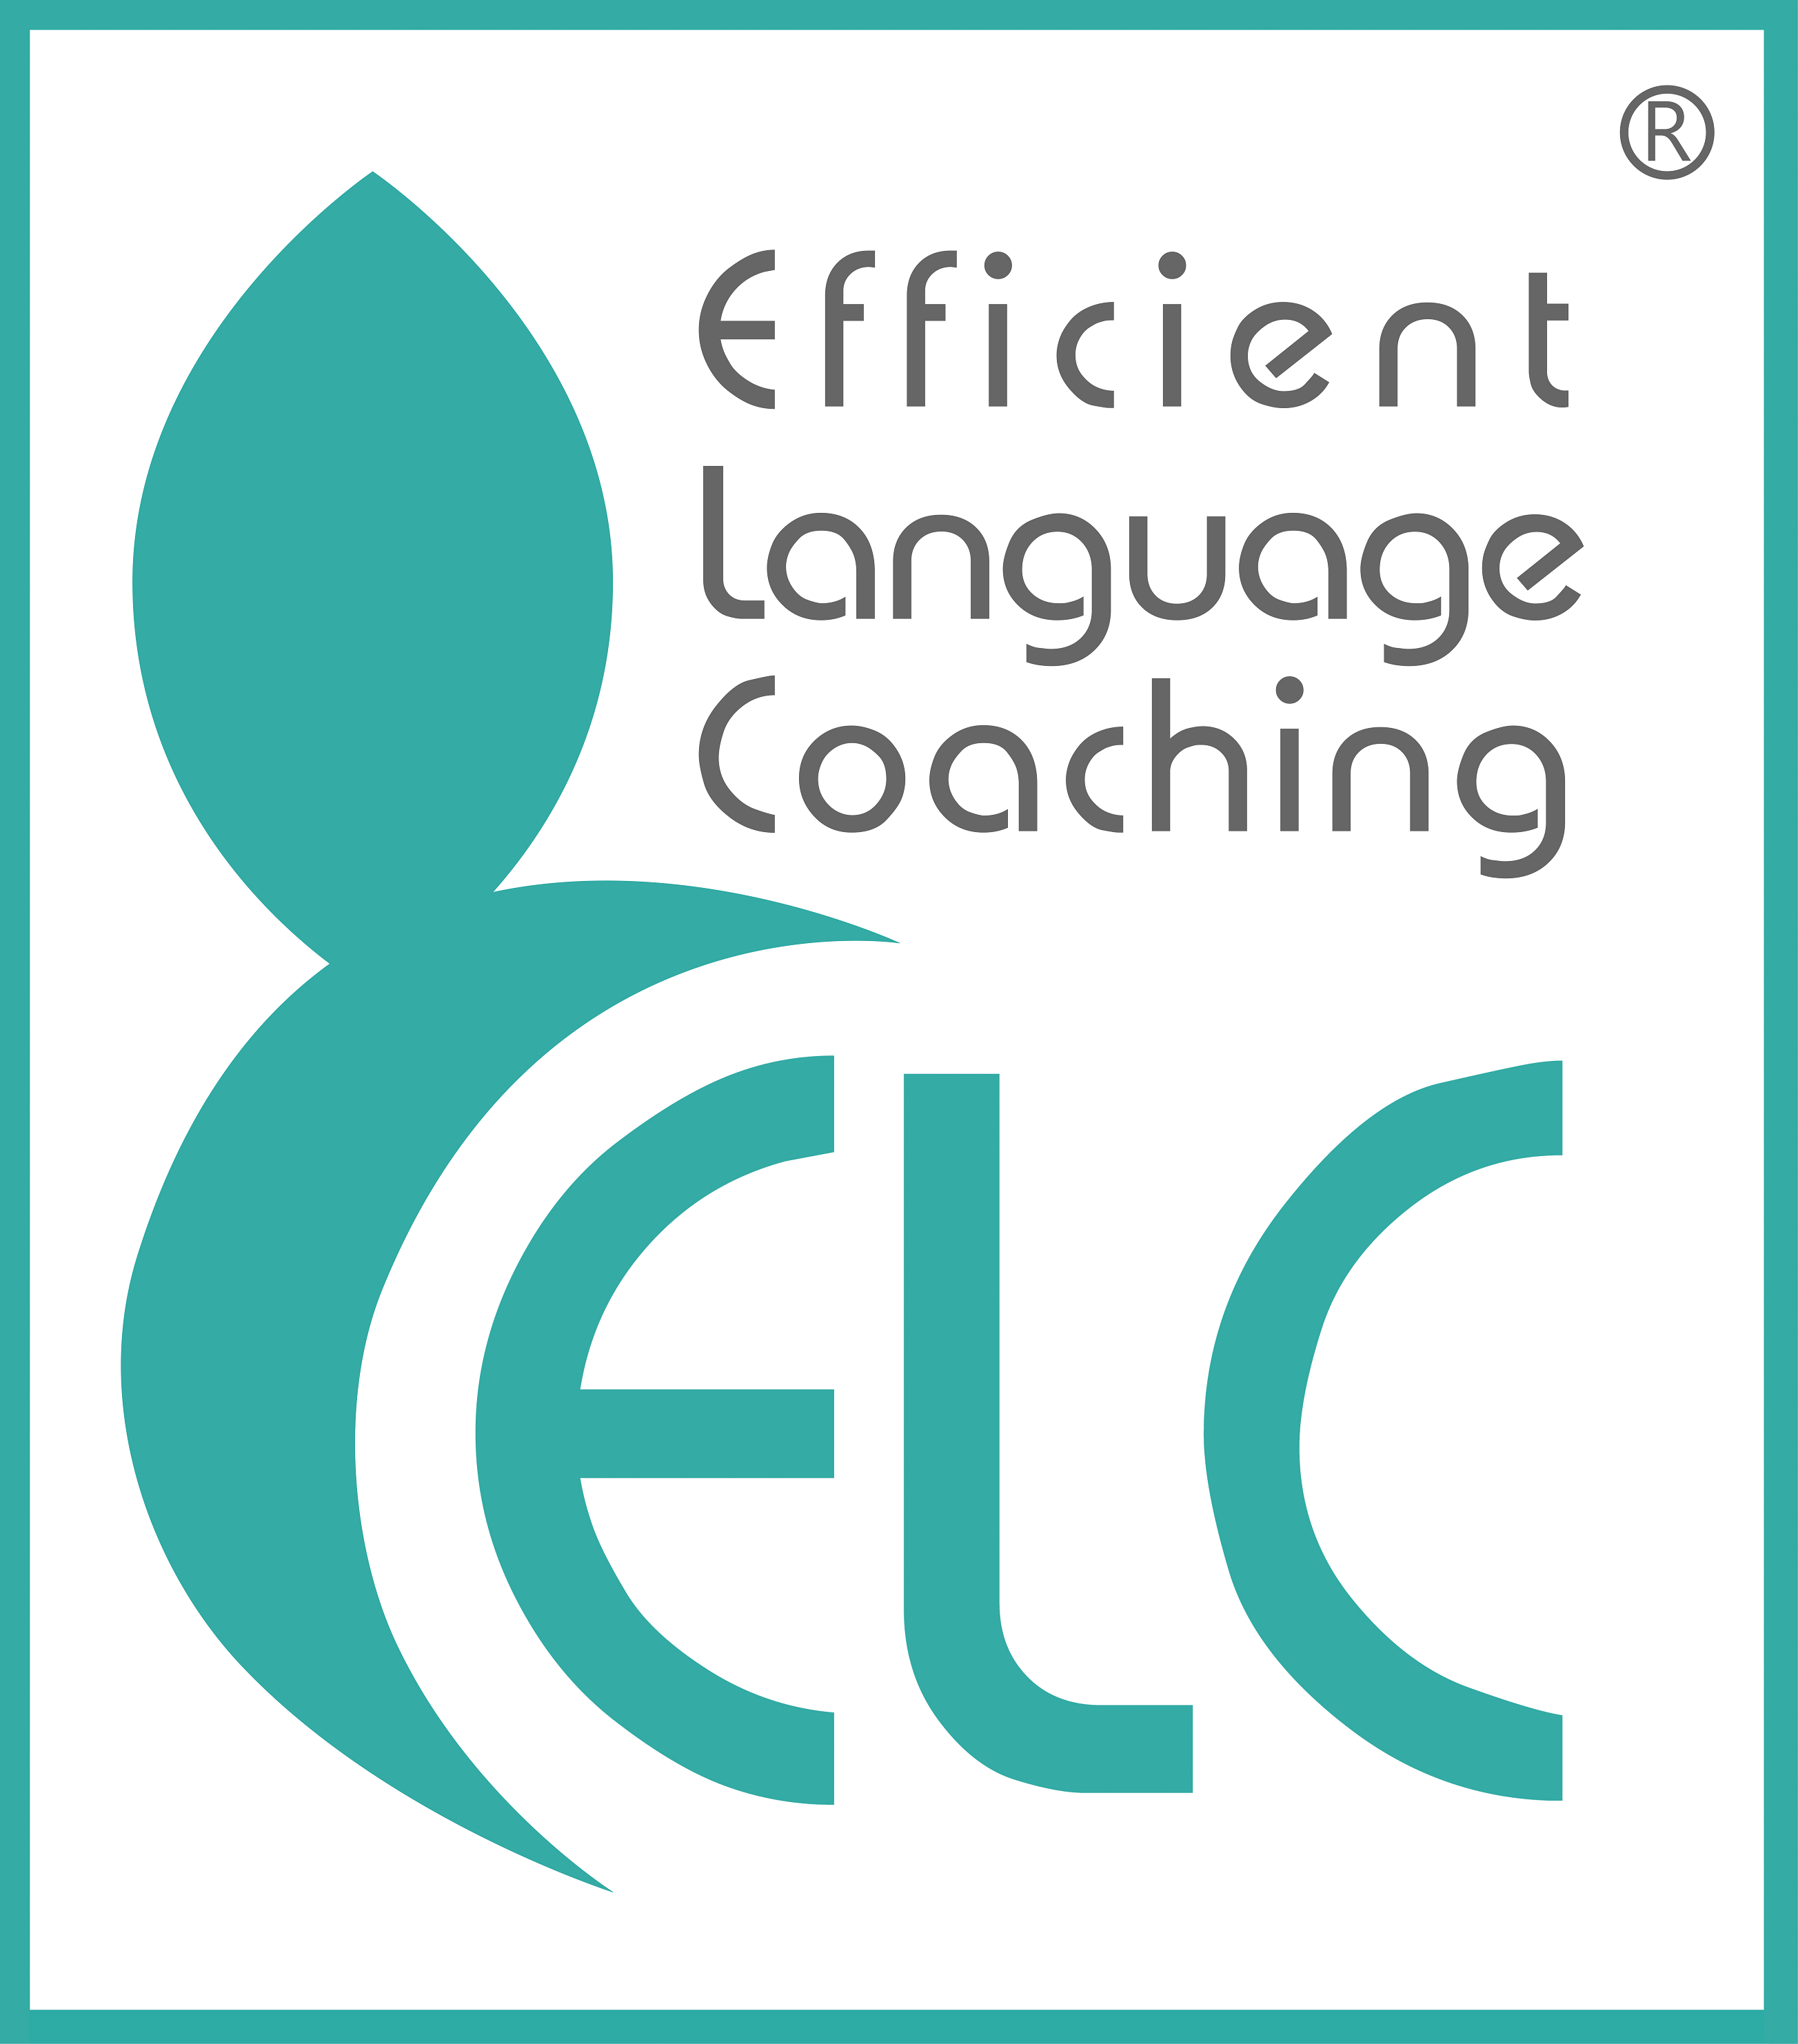 Efficient Language Coaching